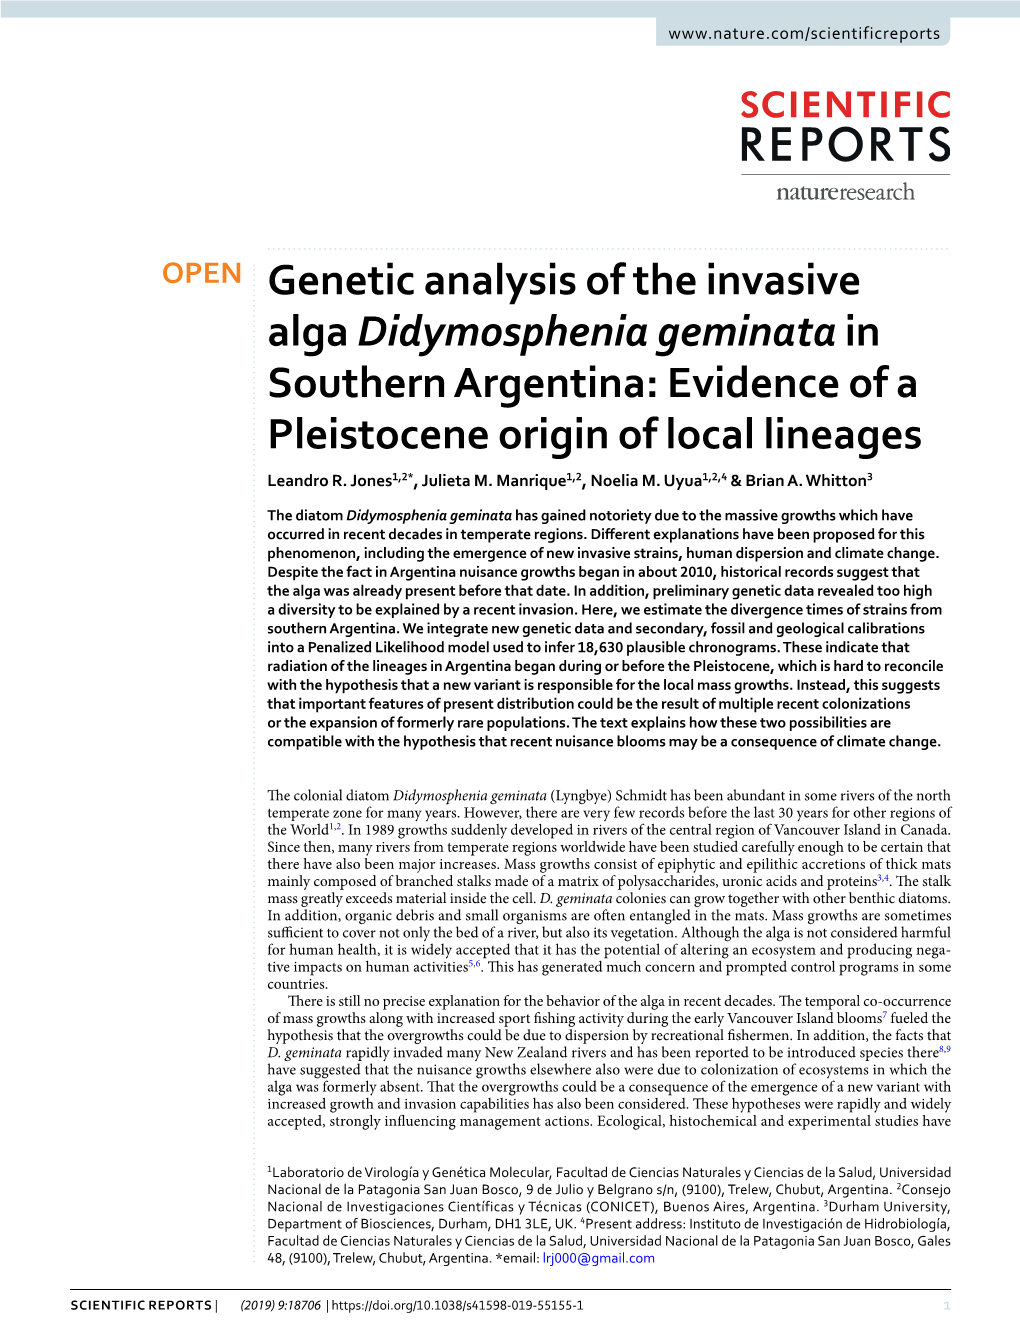 Genetic Analysis of the Invasive Alga Didymosphenia Geminata in Southern Argentina: Evidence of a Pleistocene Origin of Local Lineages Leandro R